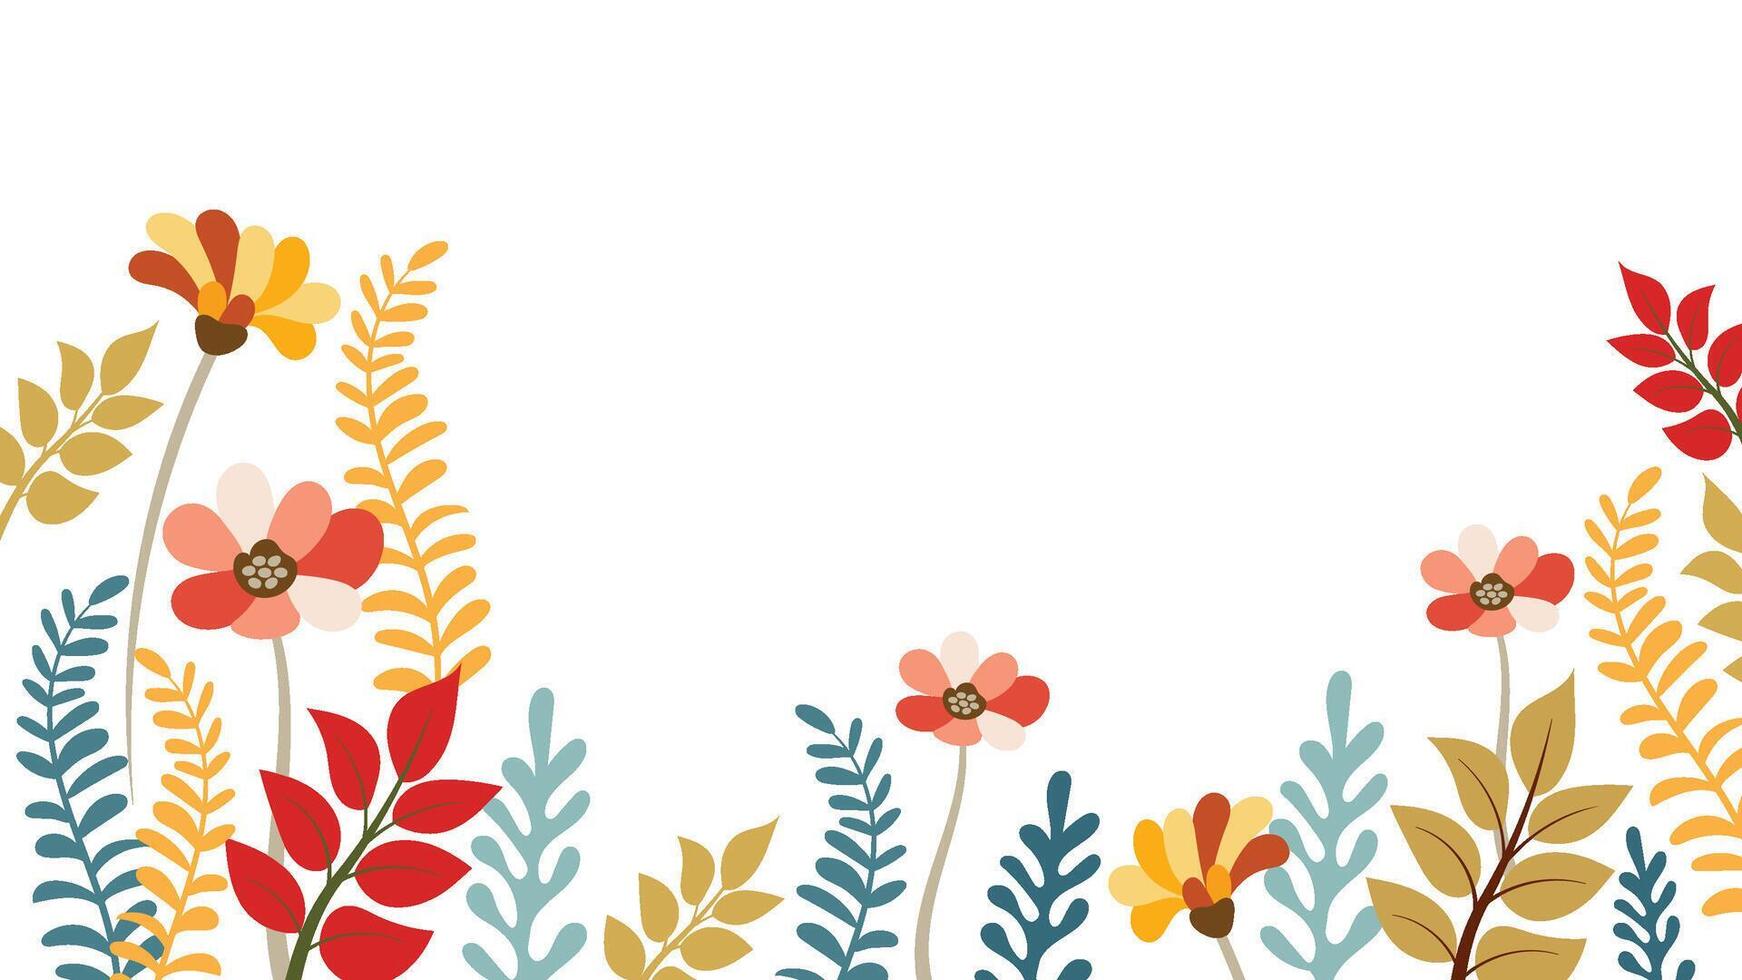 Abstract flower background design border frame vector